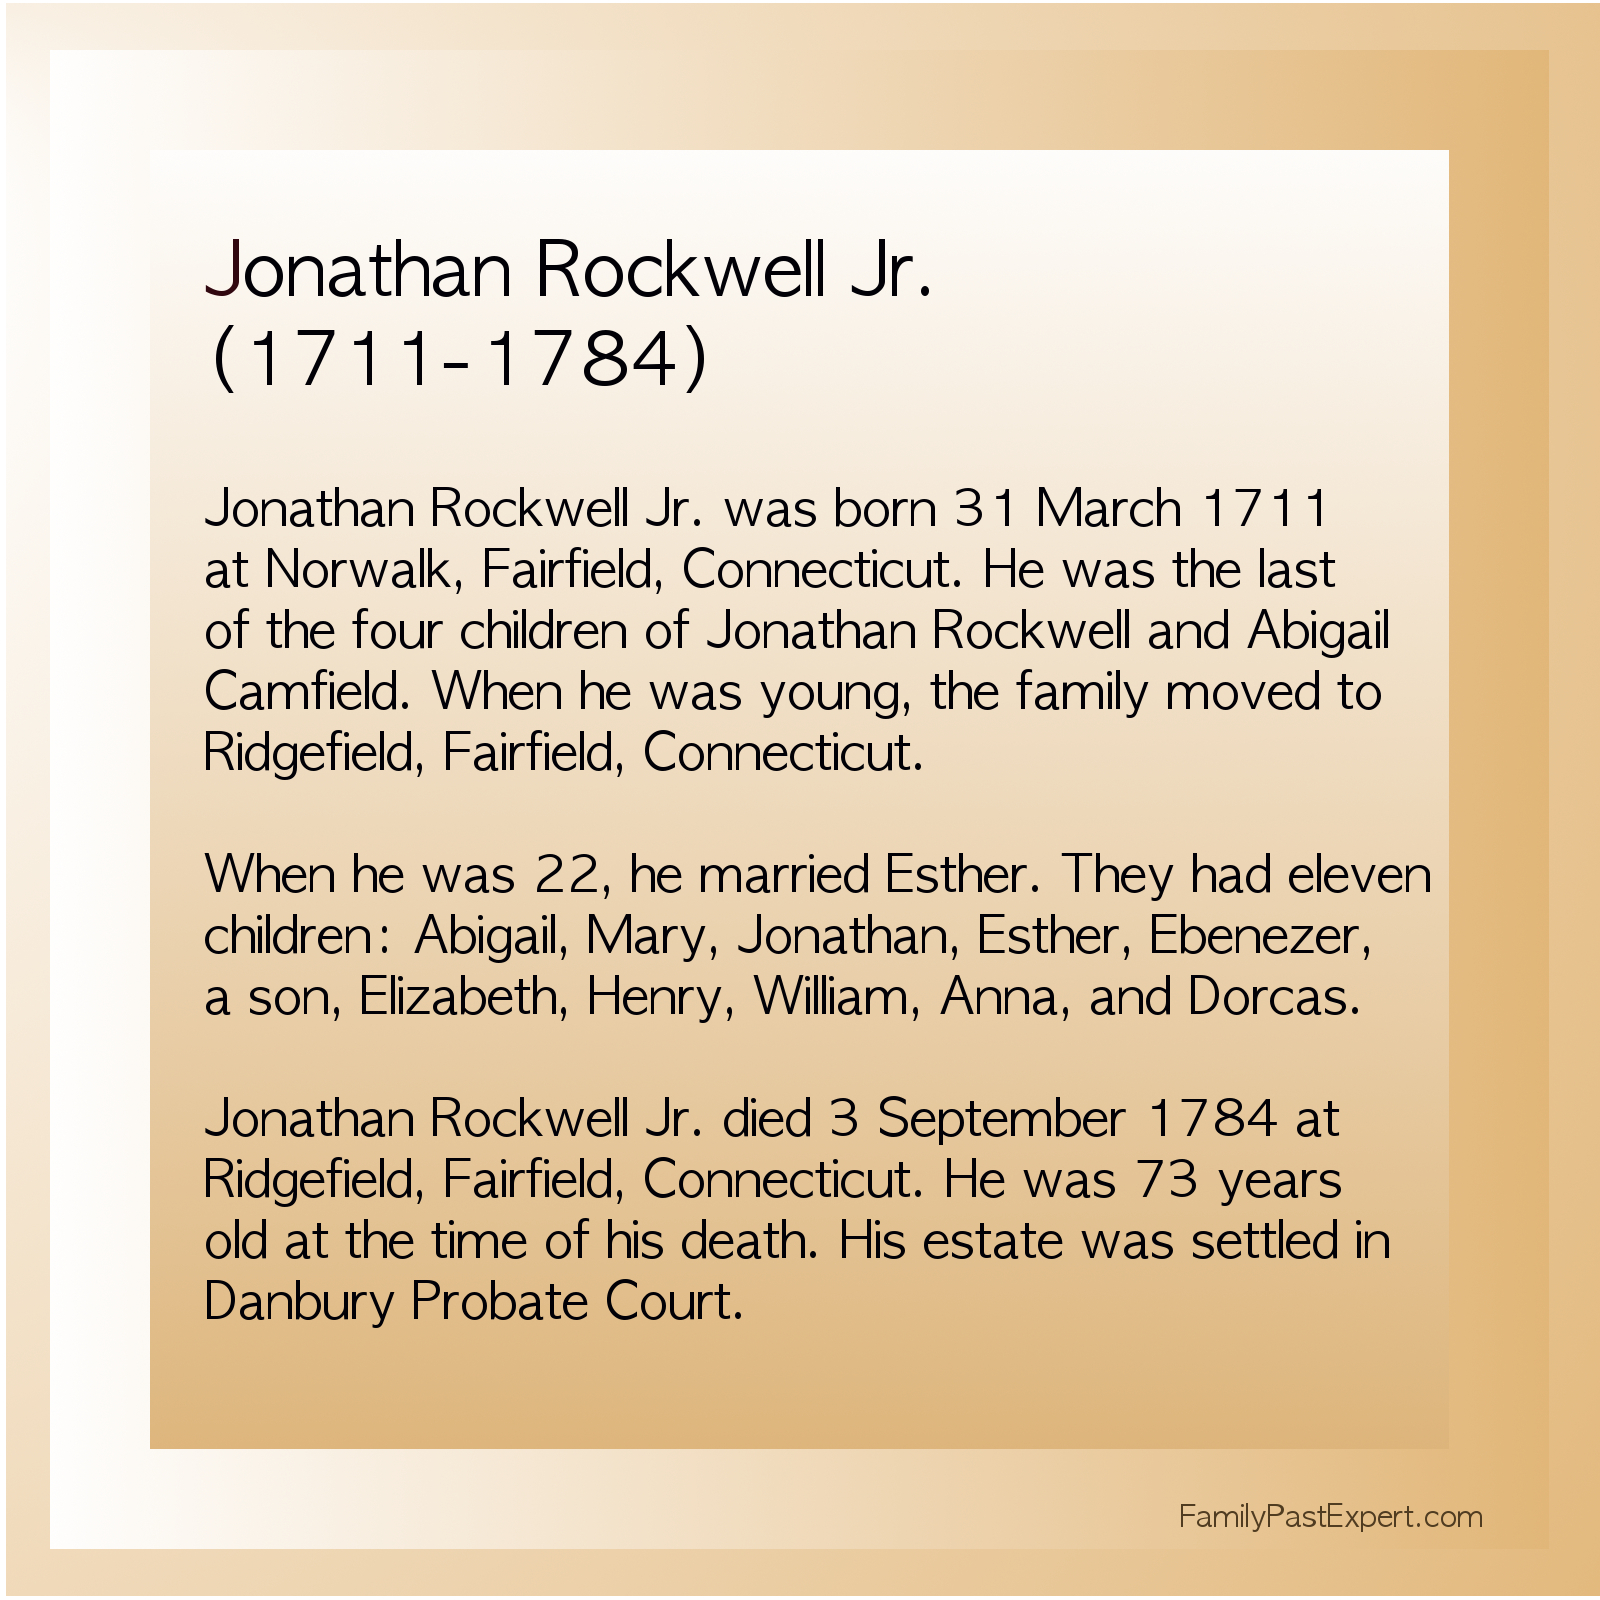 Jonathan Rockwell Jr. (1711-1784)